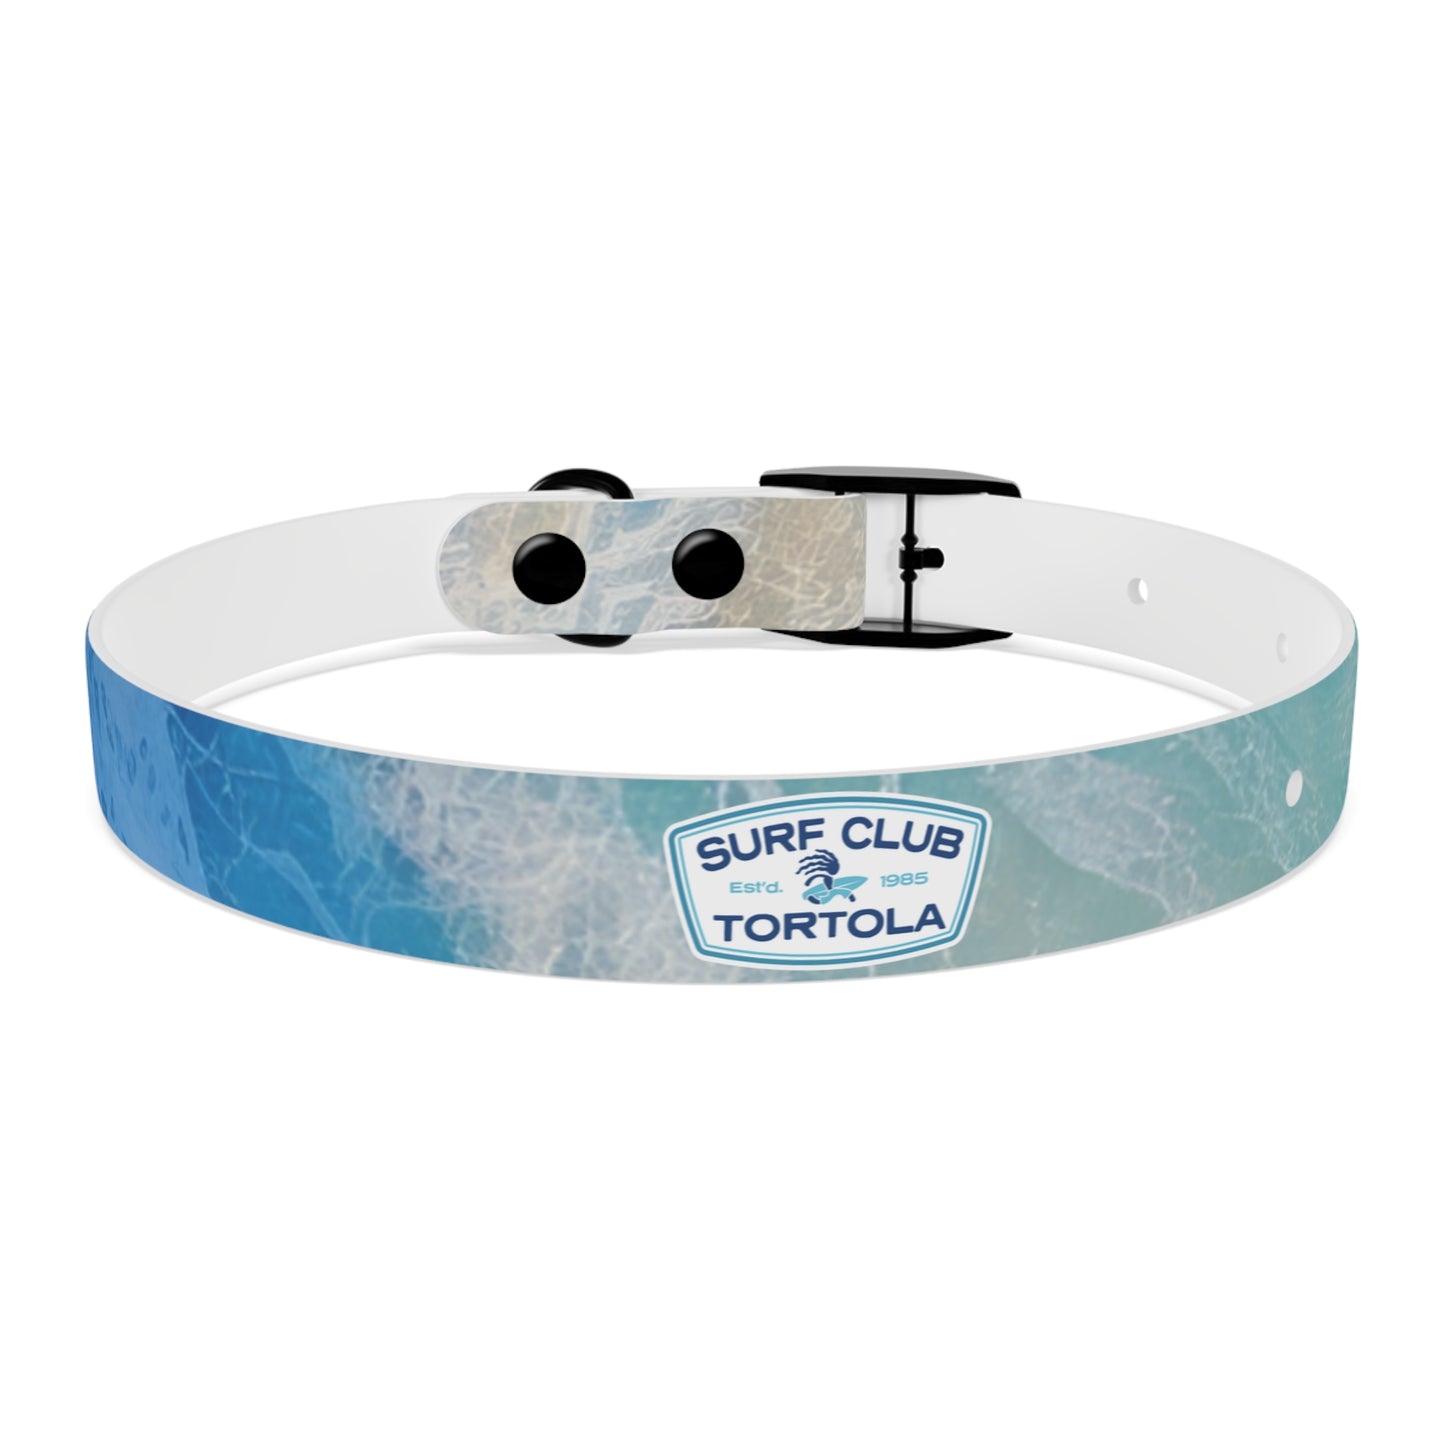 "Surf Club Tortola" The Dog Collar